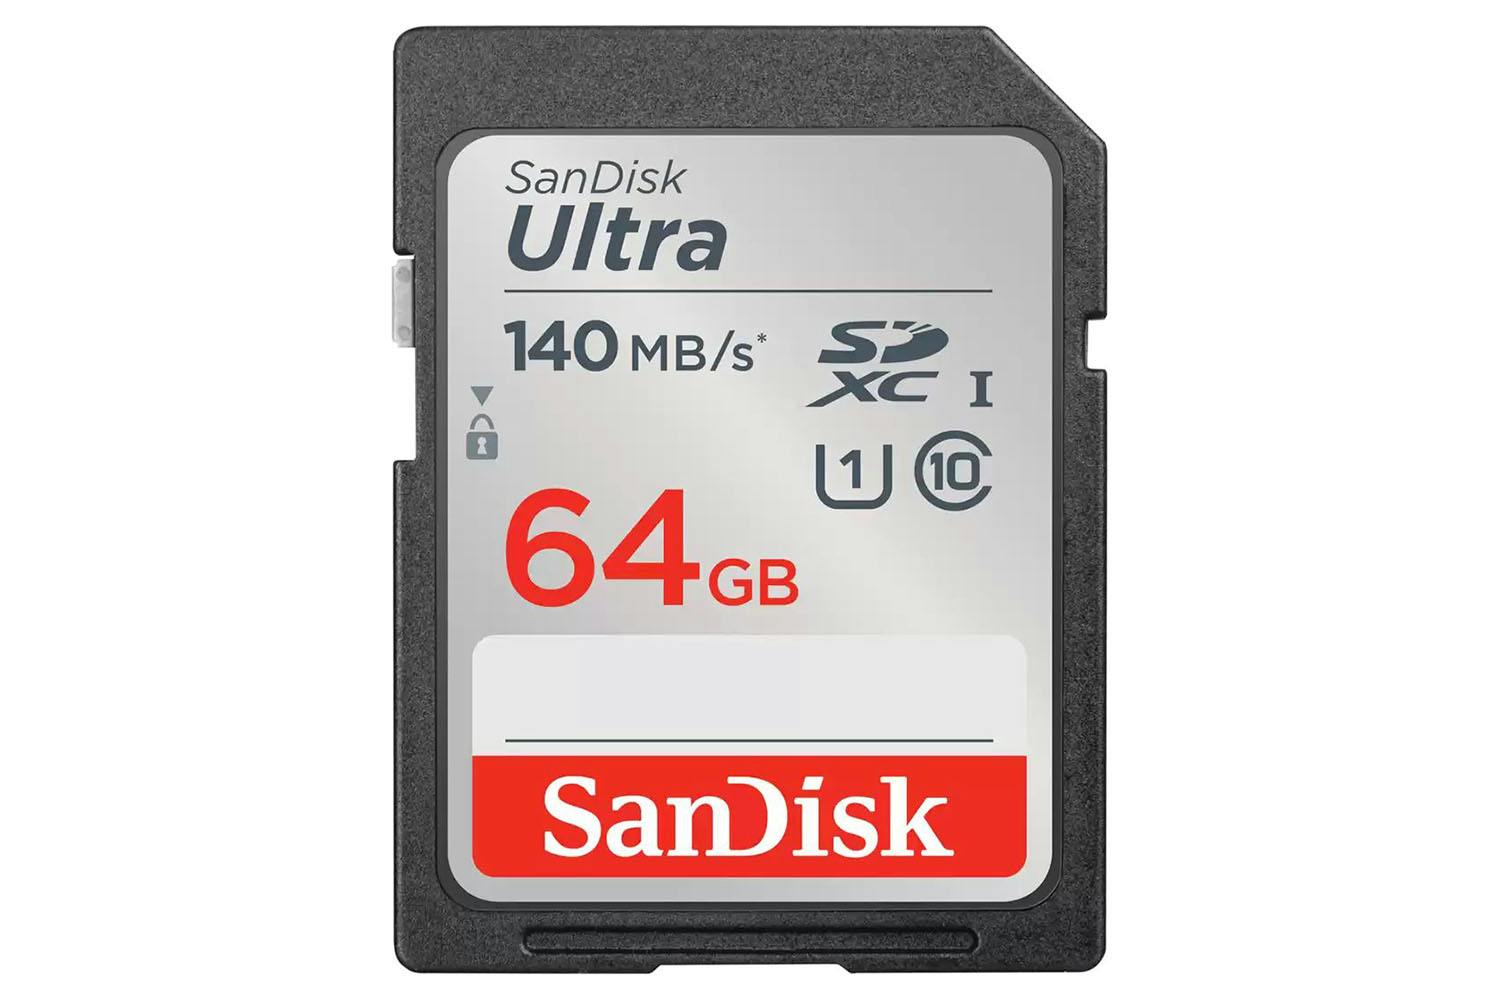 SanDisk Ultra SDHC UHS-I and SDXC UHS-I Memory Card | 64GB